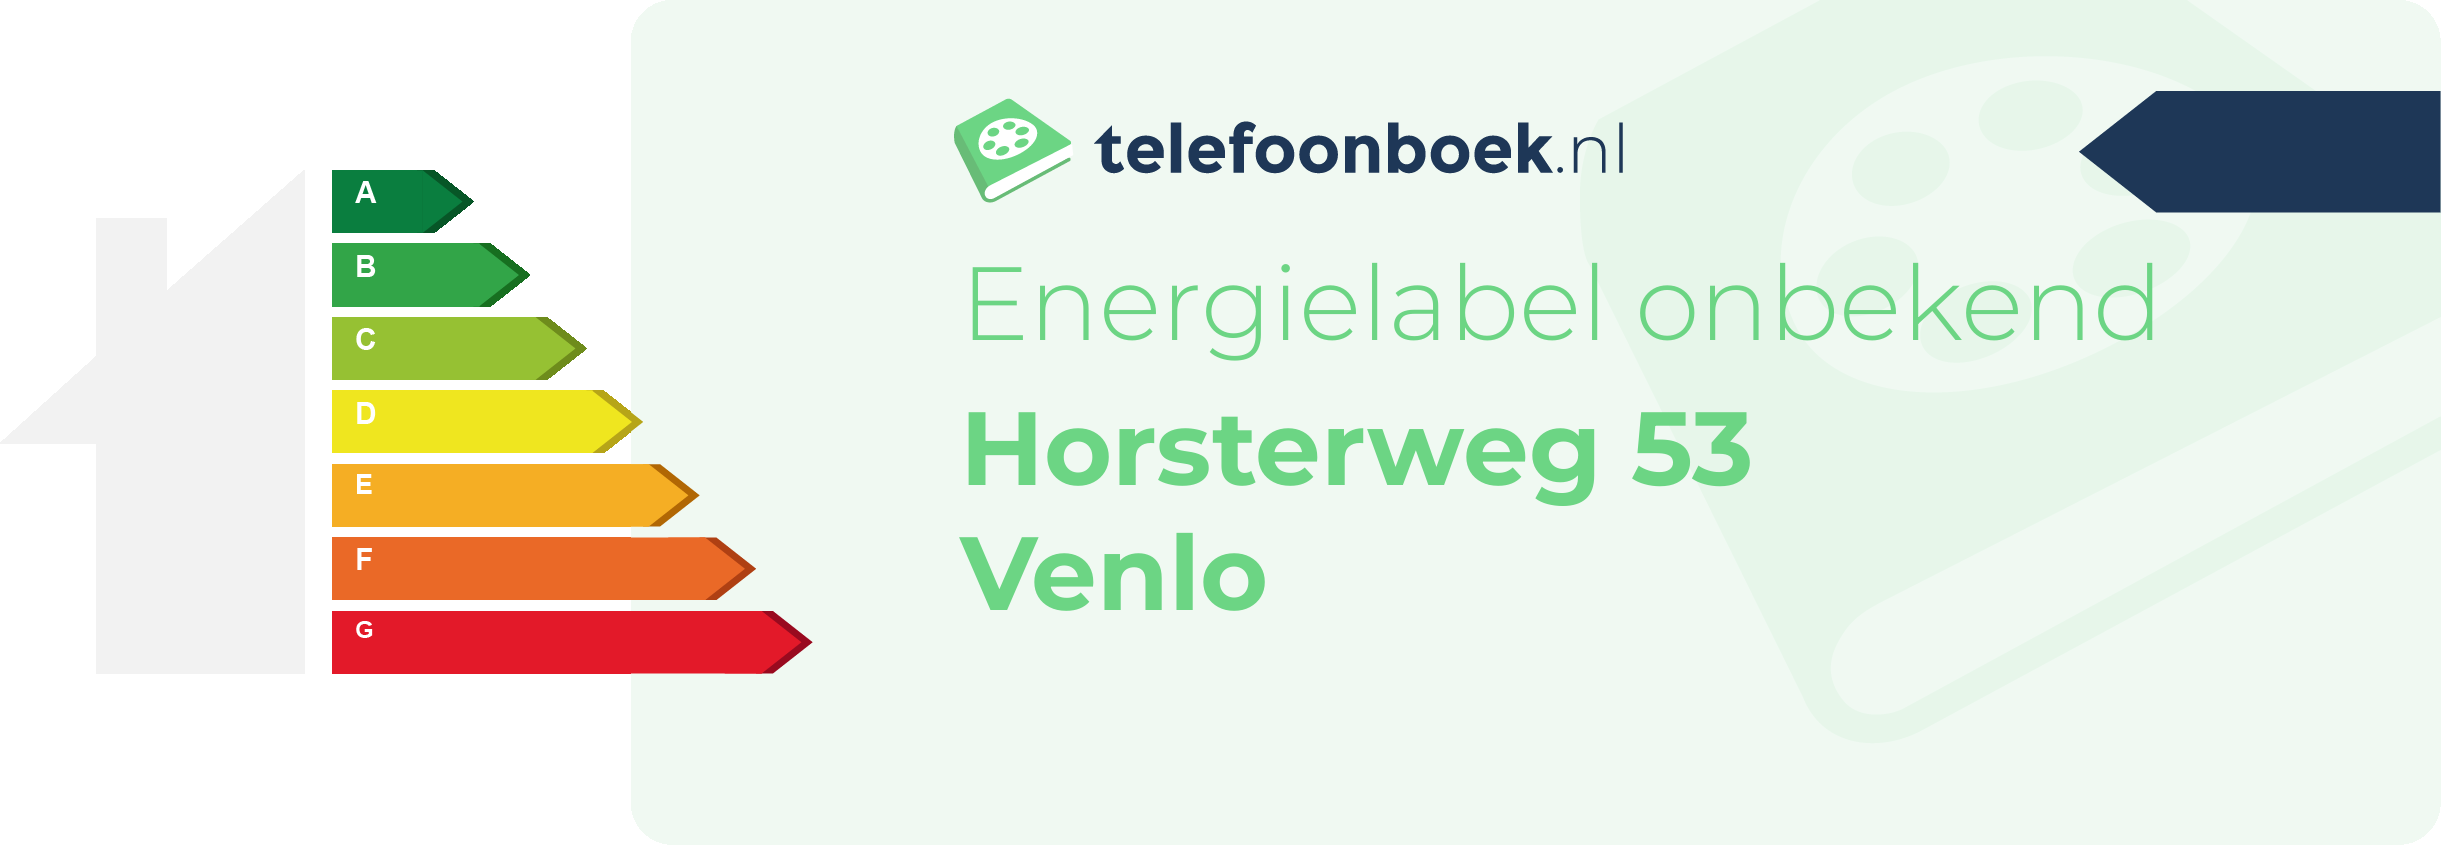 Energielabel Horsterweg 53 Venlo